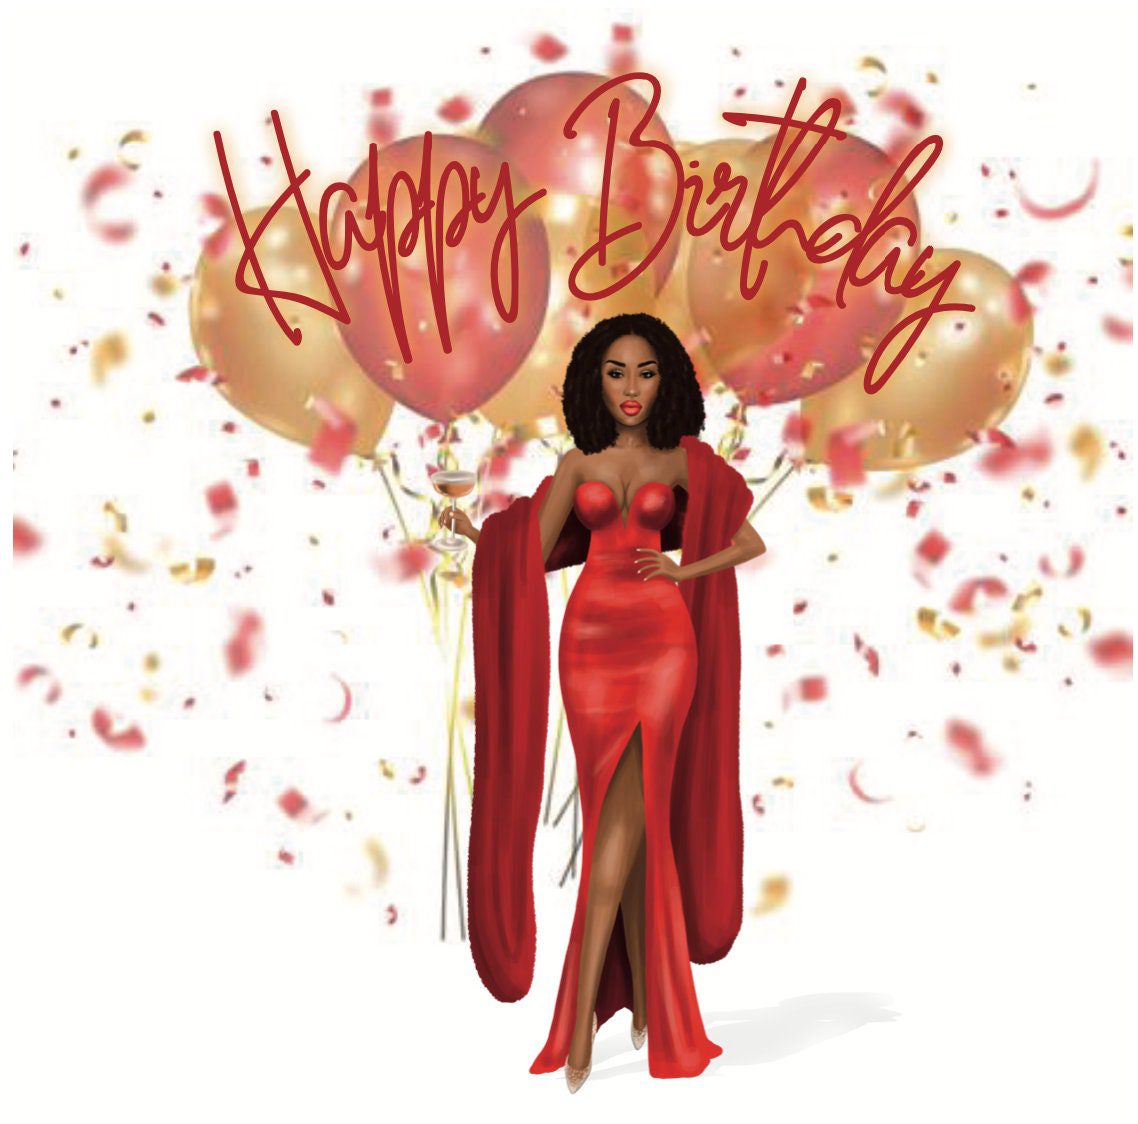 Ruby Diva Happy Birthday Card